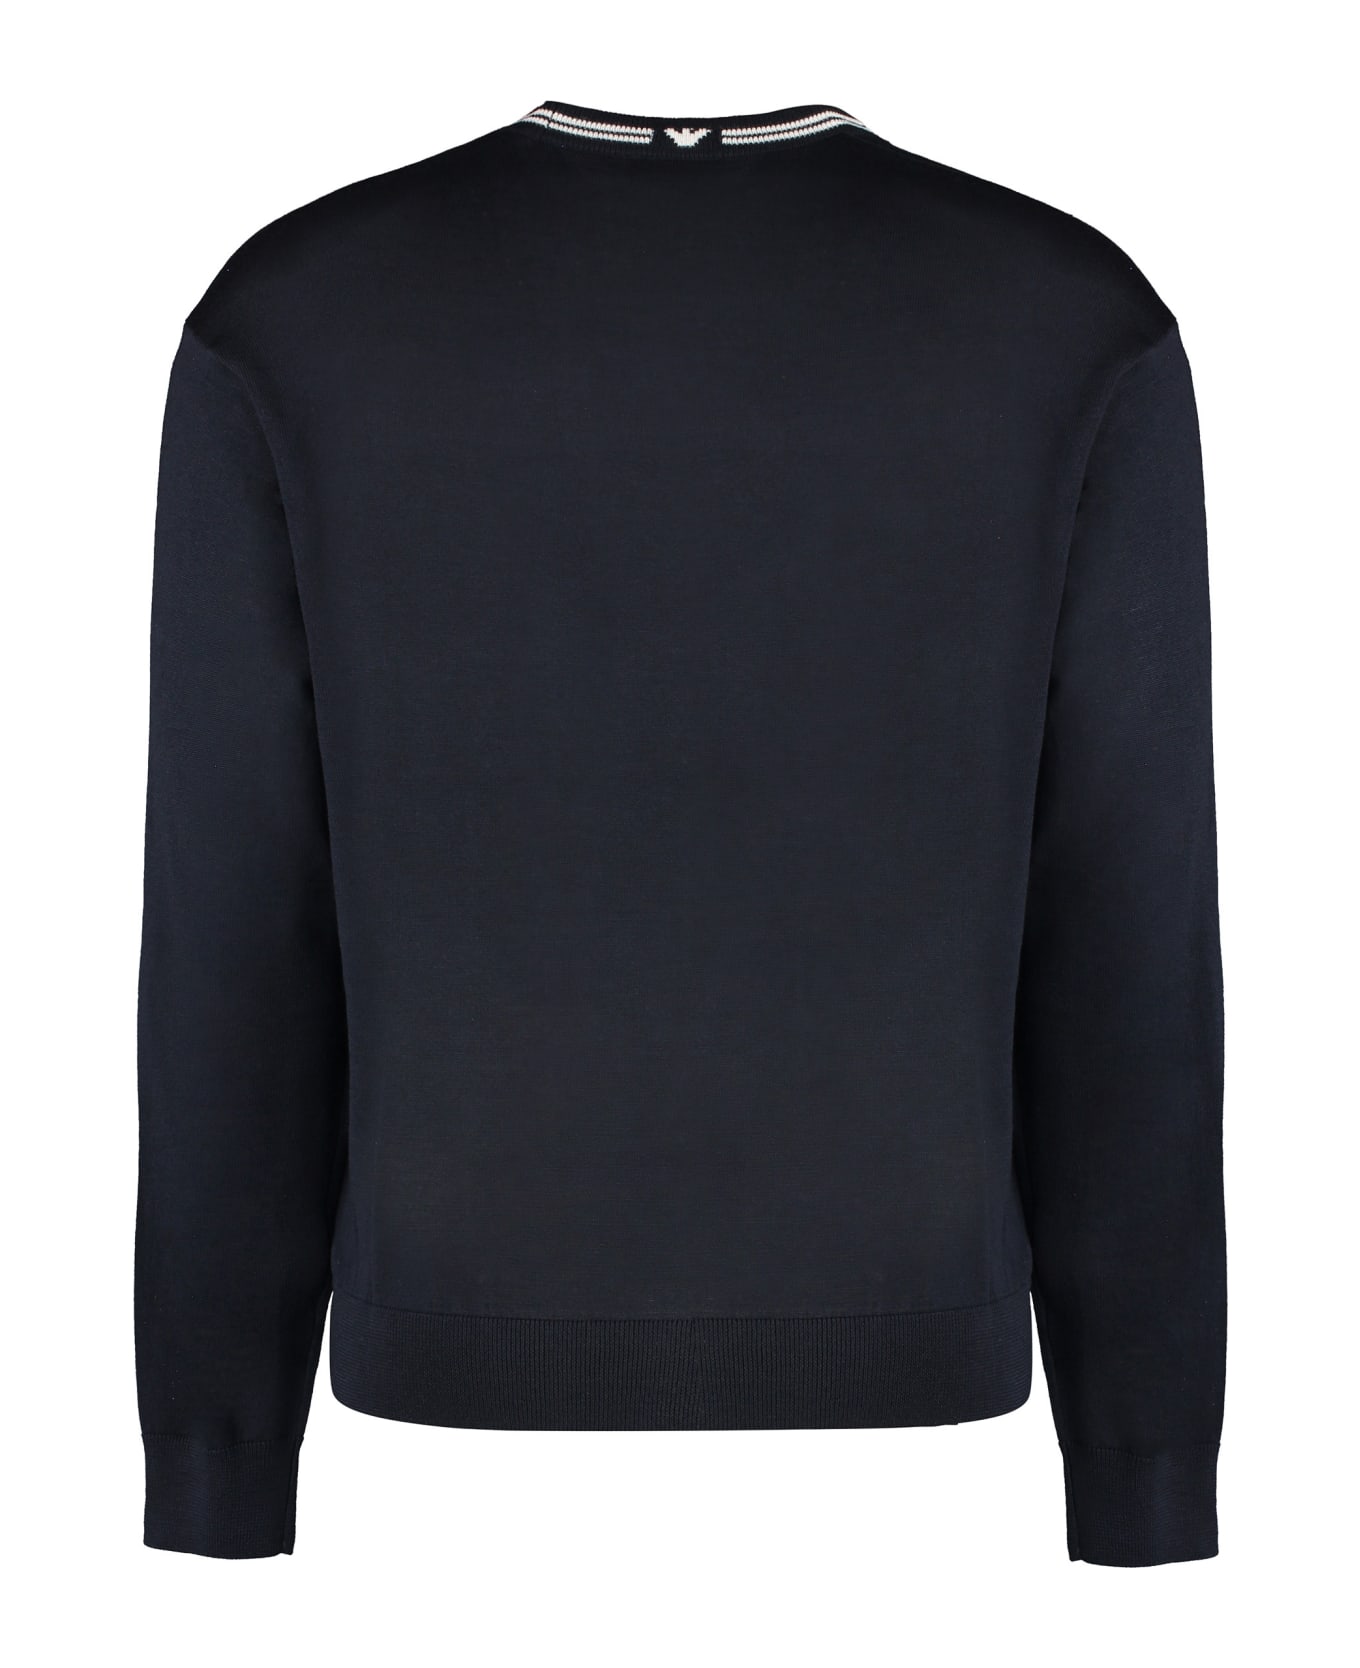 Emporio Armani Virgin Wool Crew-neck Sweater - black